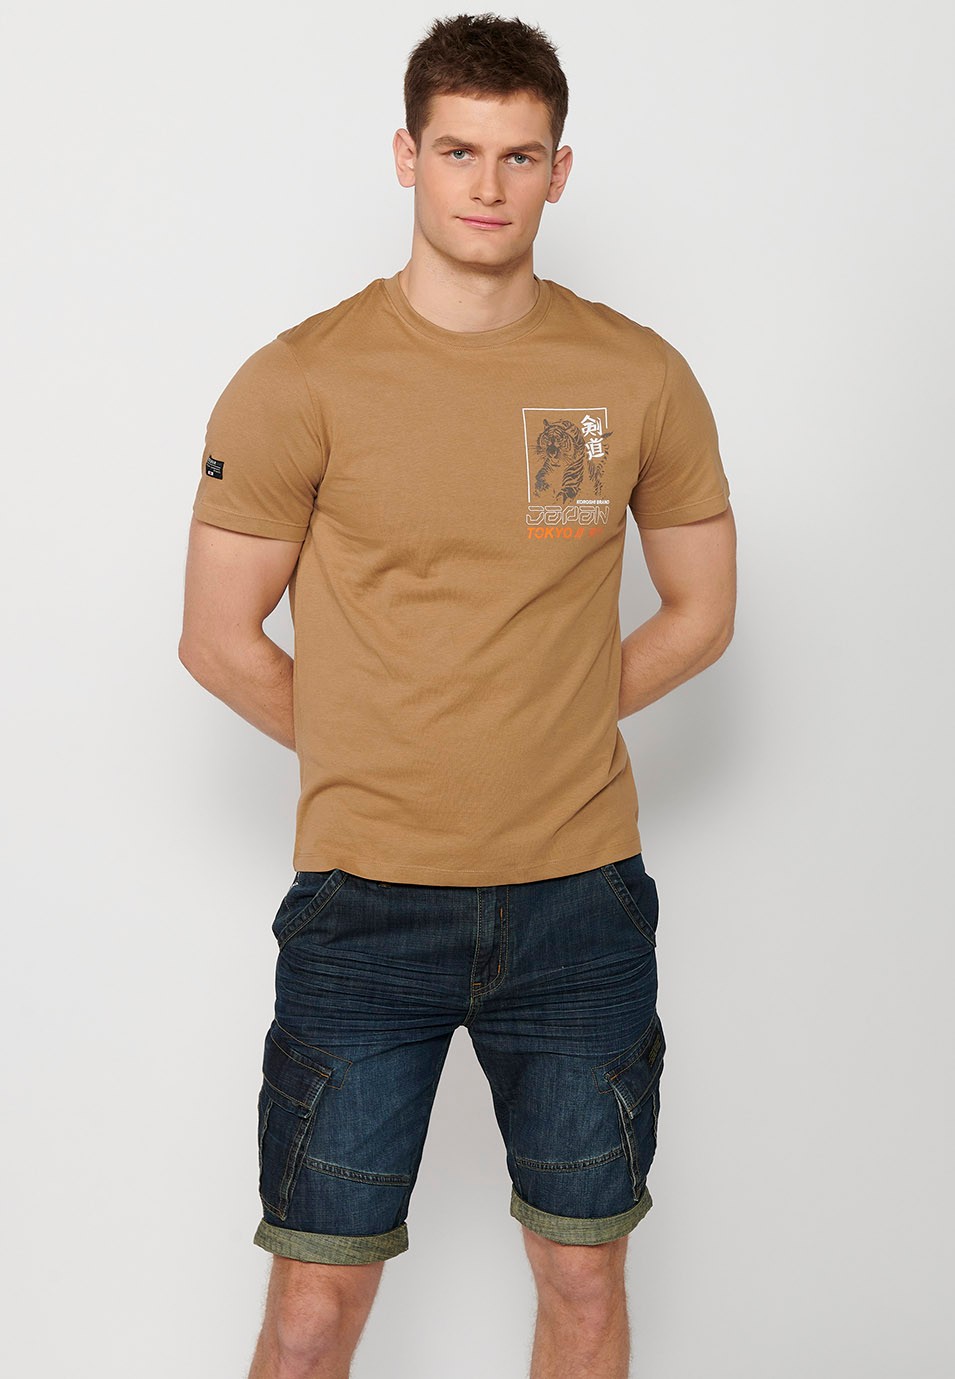 Short-sleeved cotton t-shirt with jungle tigger back print, camel color for men